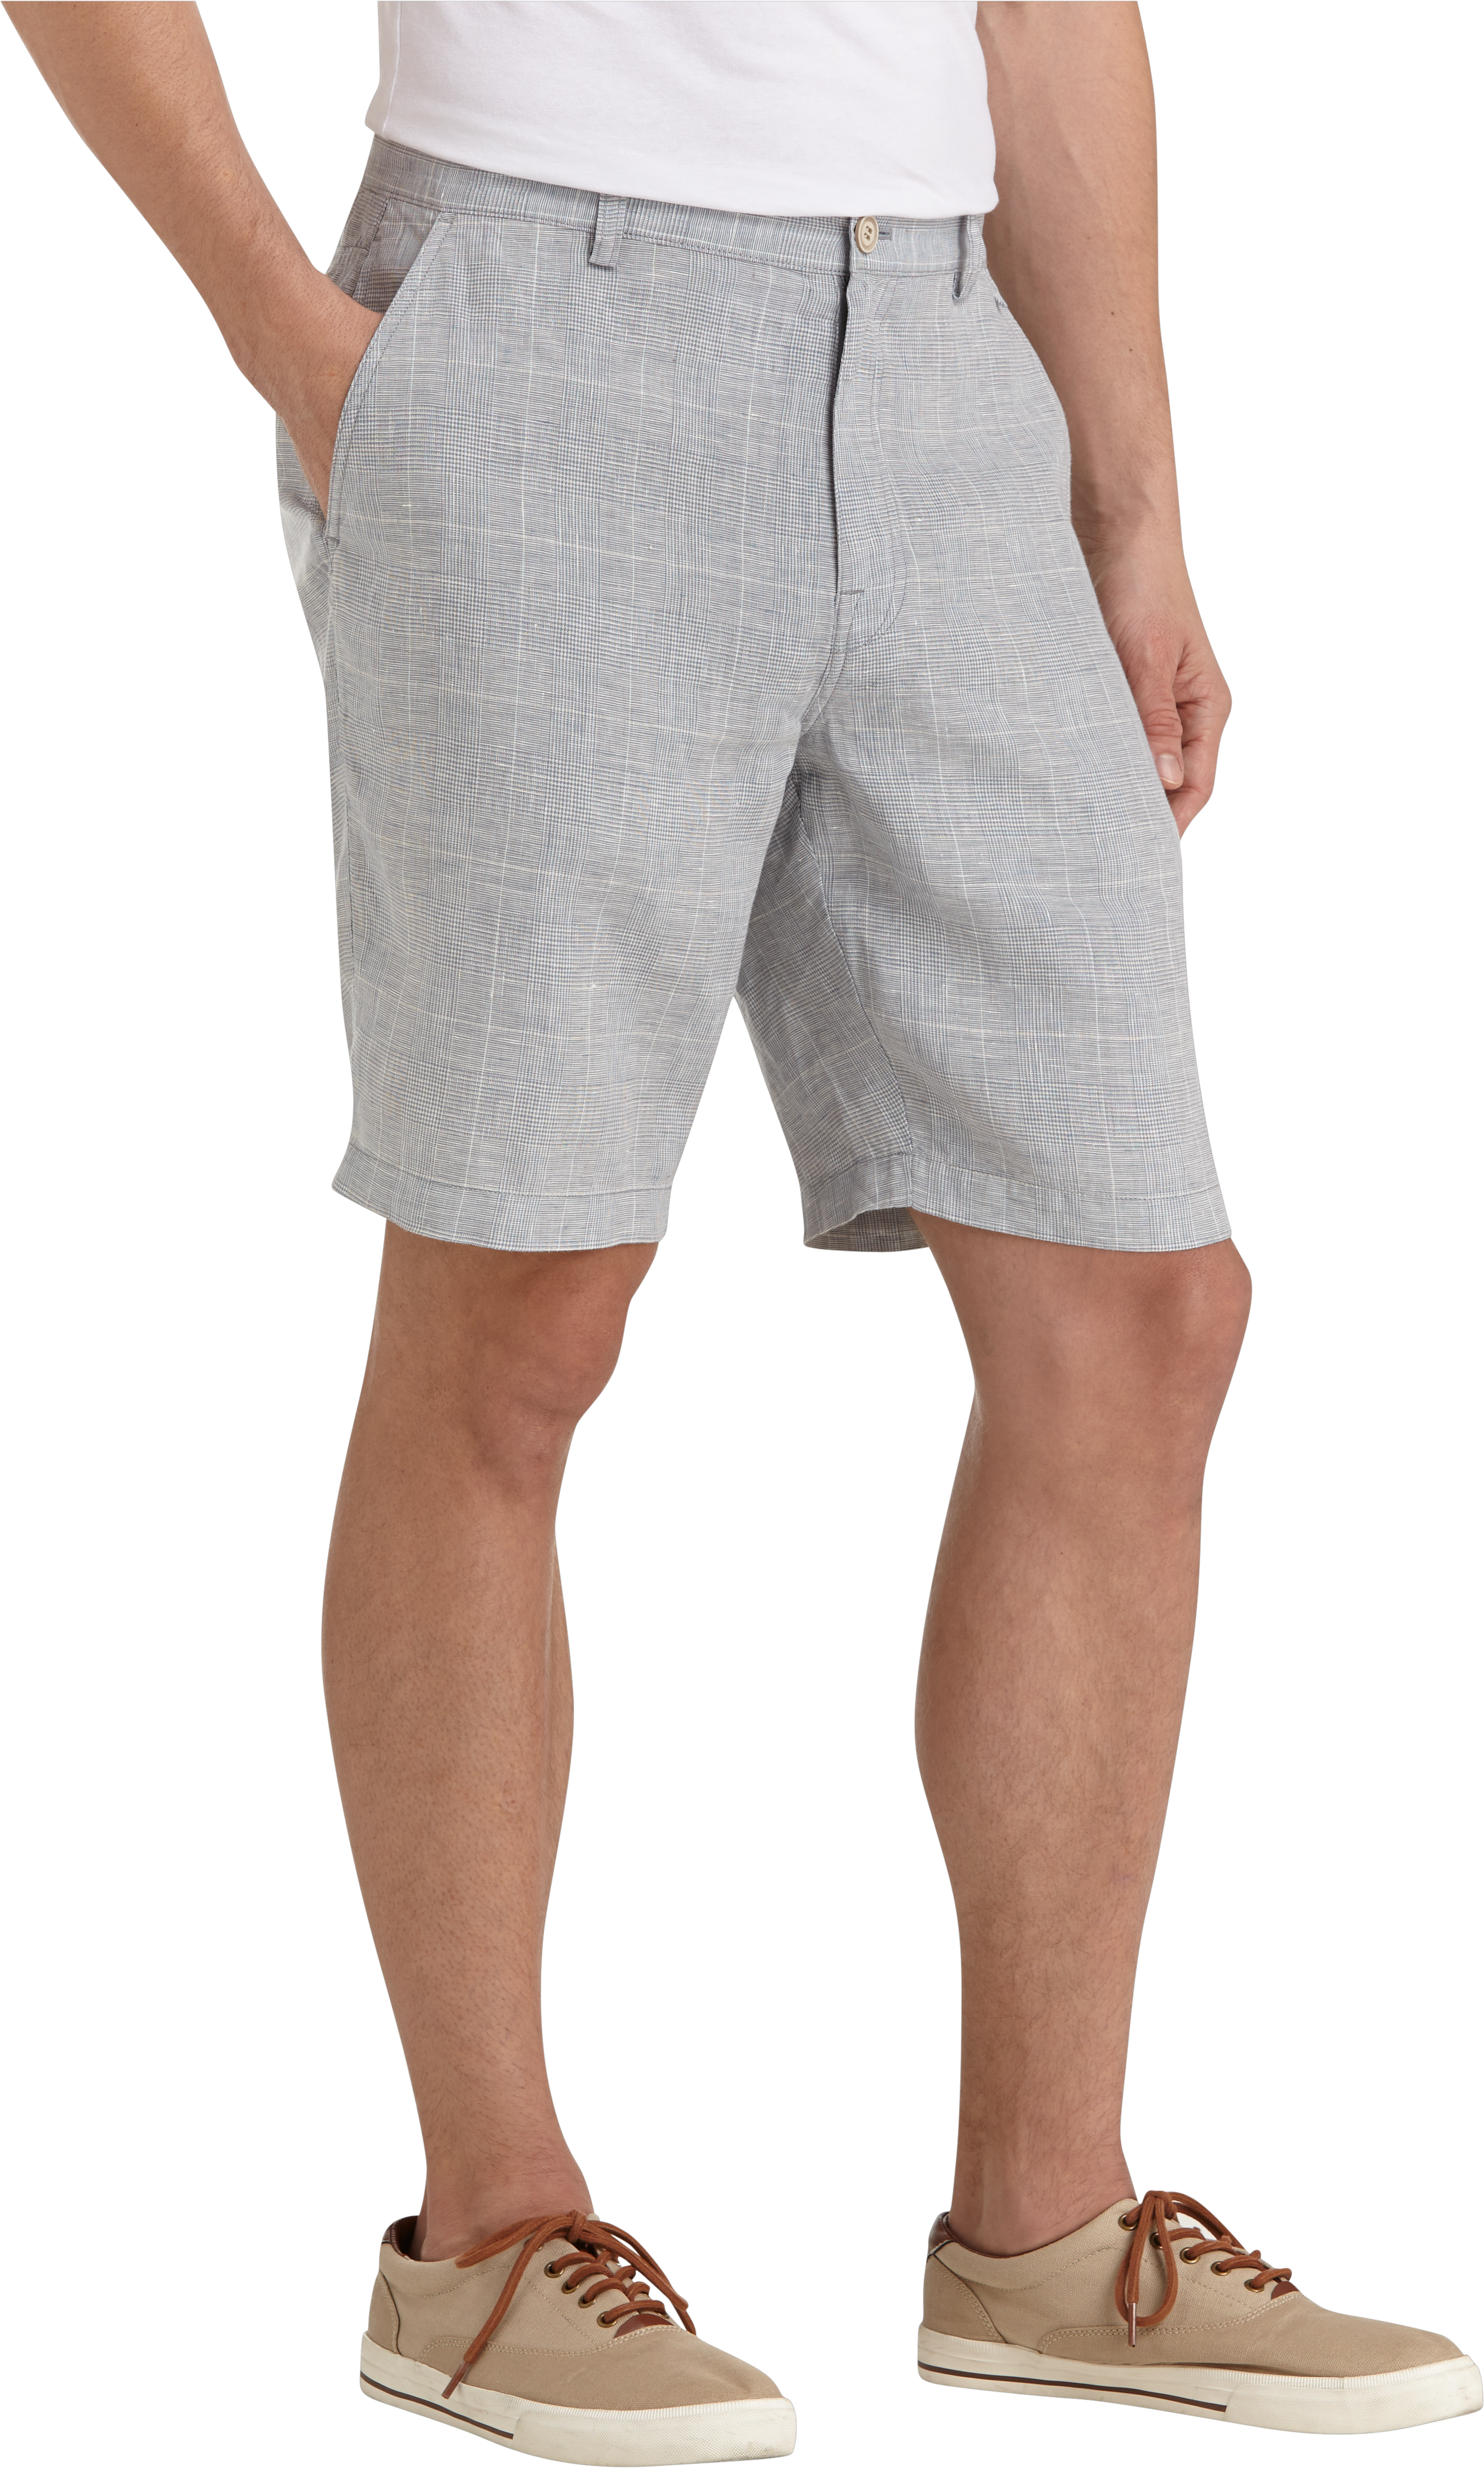 Shorts - Pants & Shorts | Men's Wearhouse